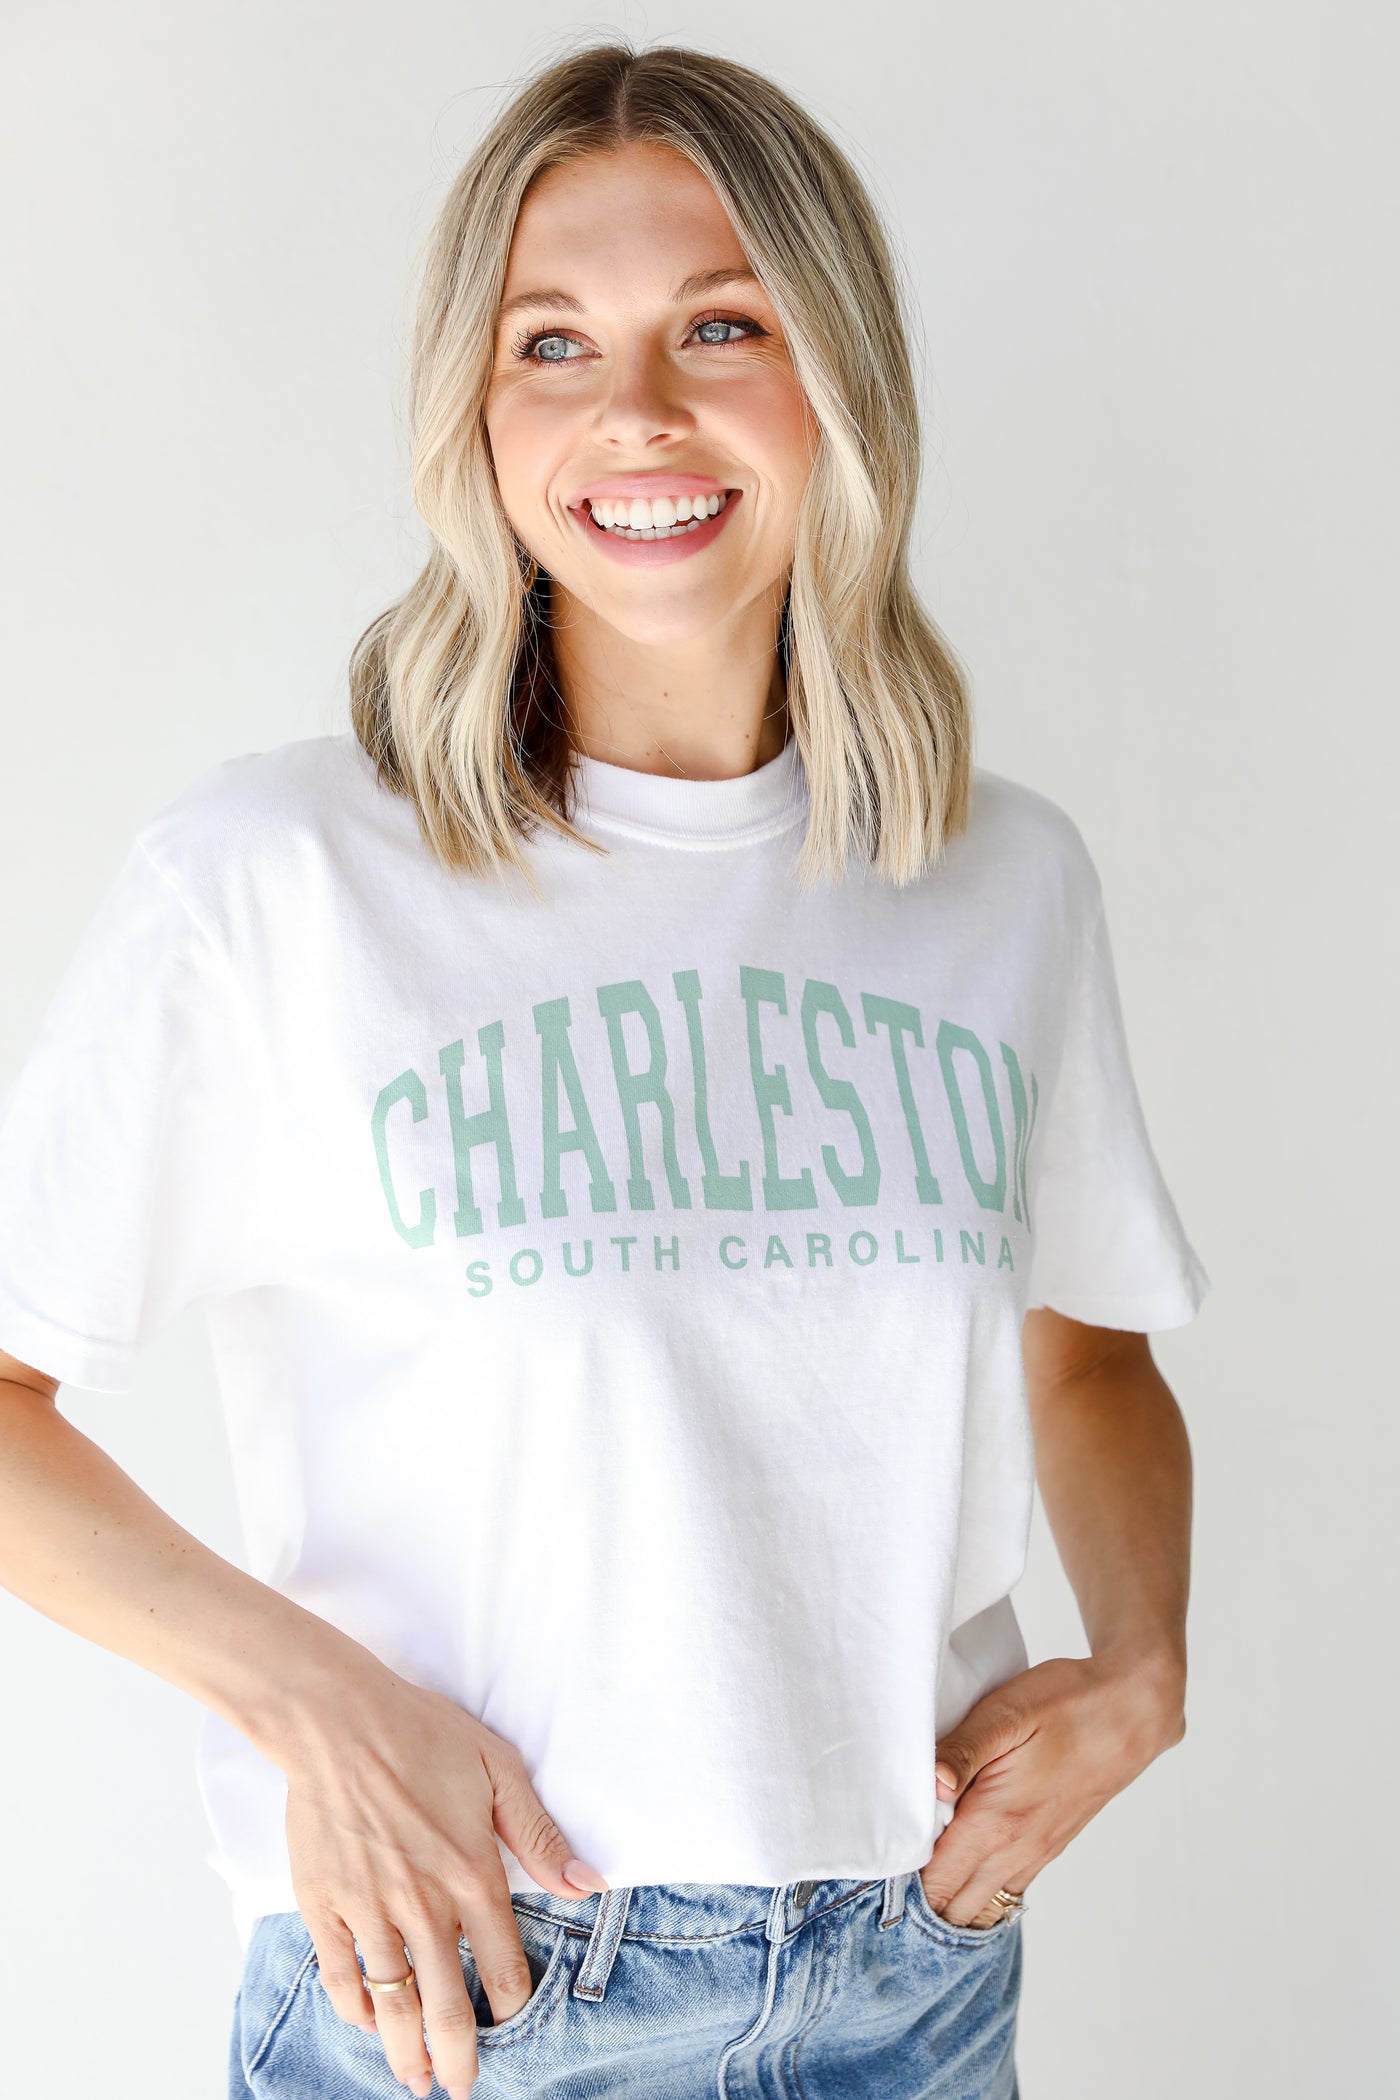 Charleston South Carolina Tee on model